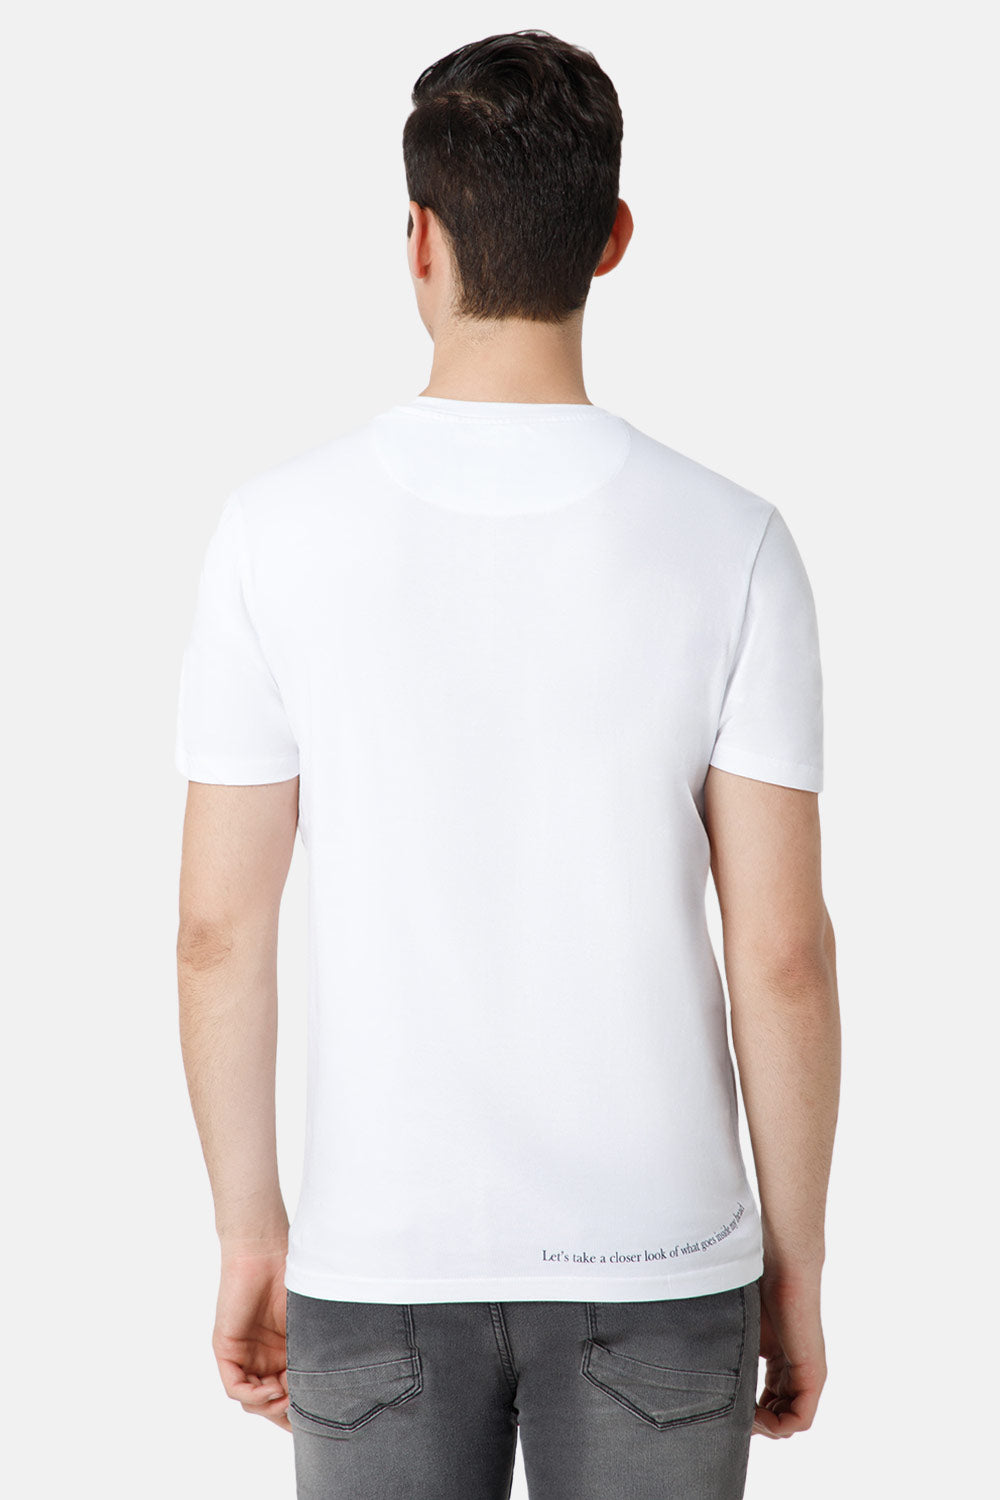 Enhance Printed Crew Neck Men's Casual T-Shirts - White - TS29